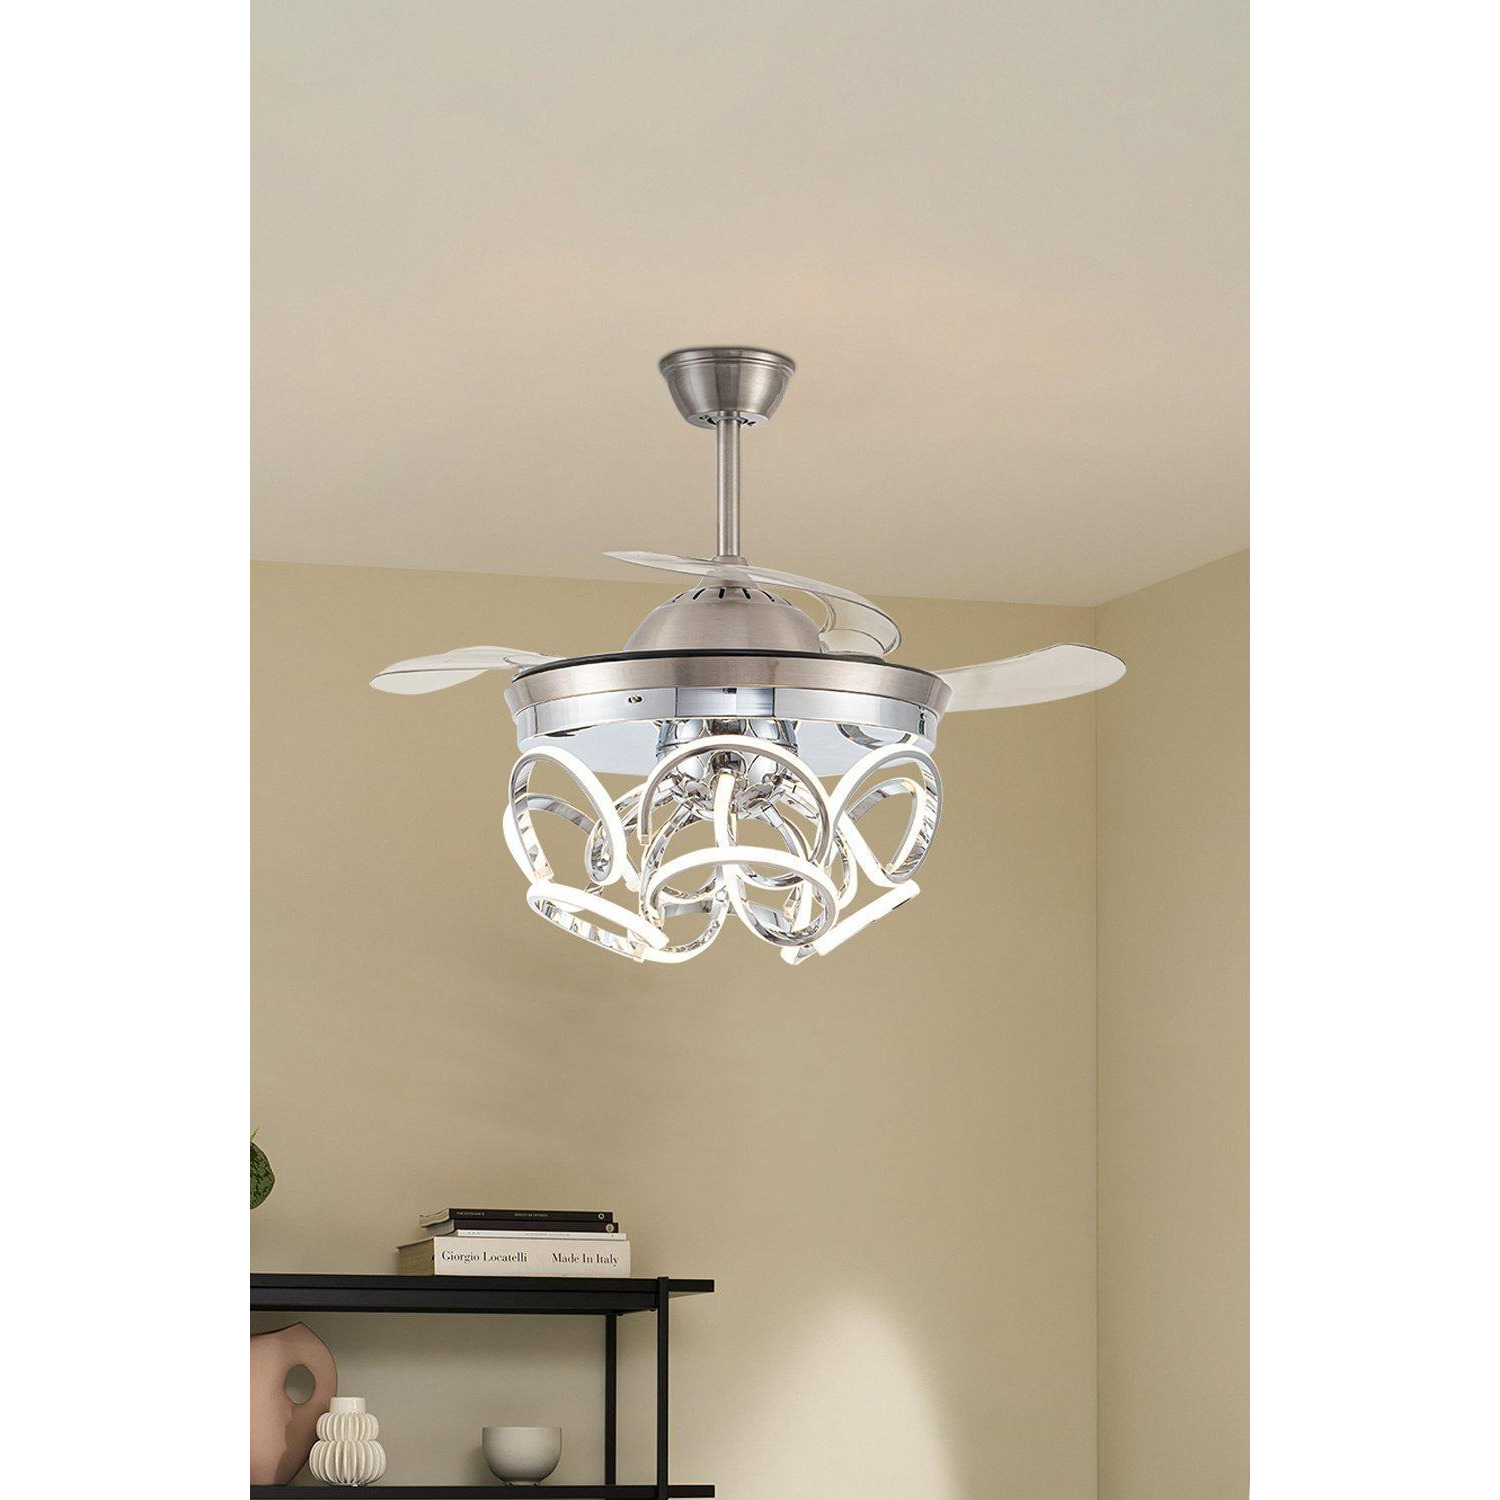 3 Blade Modern Aluminum Ceiling Fan Light - image 1